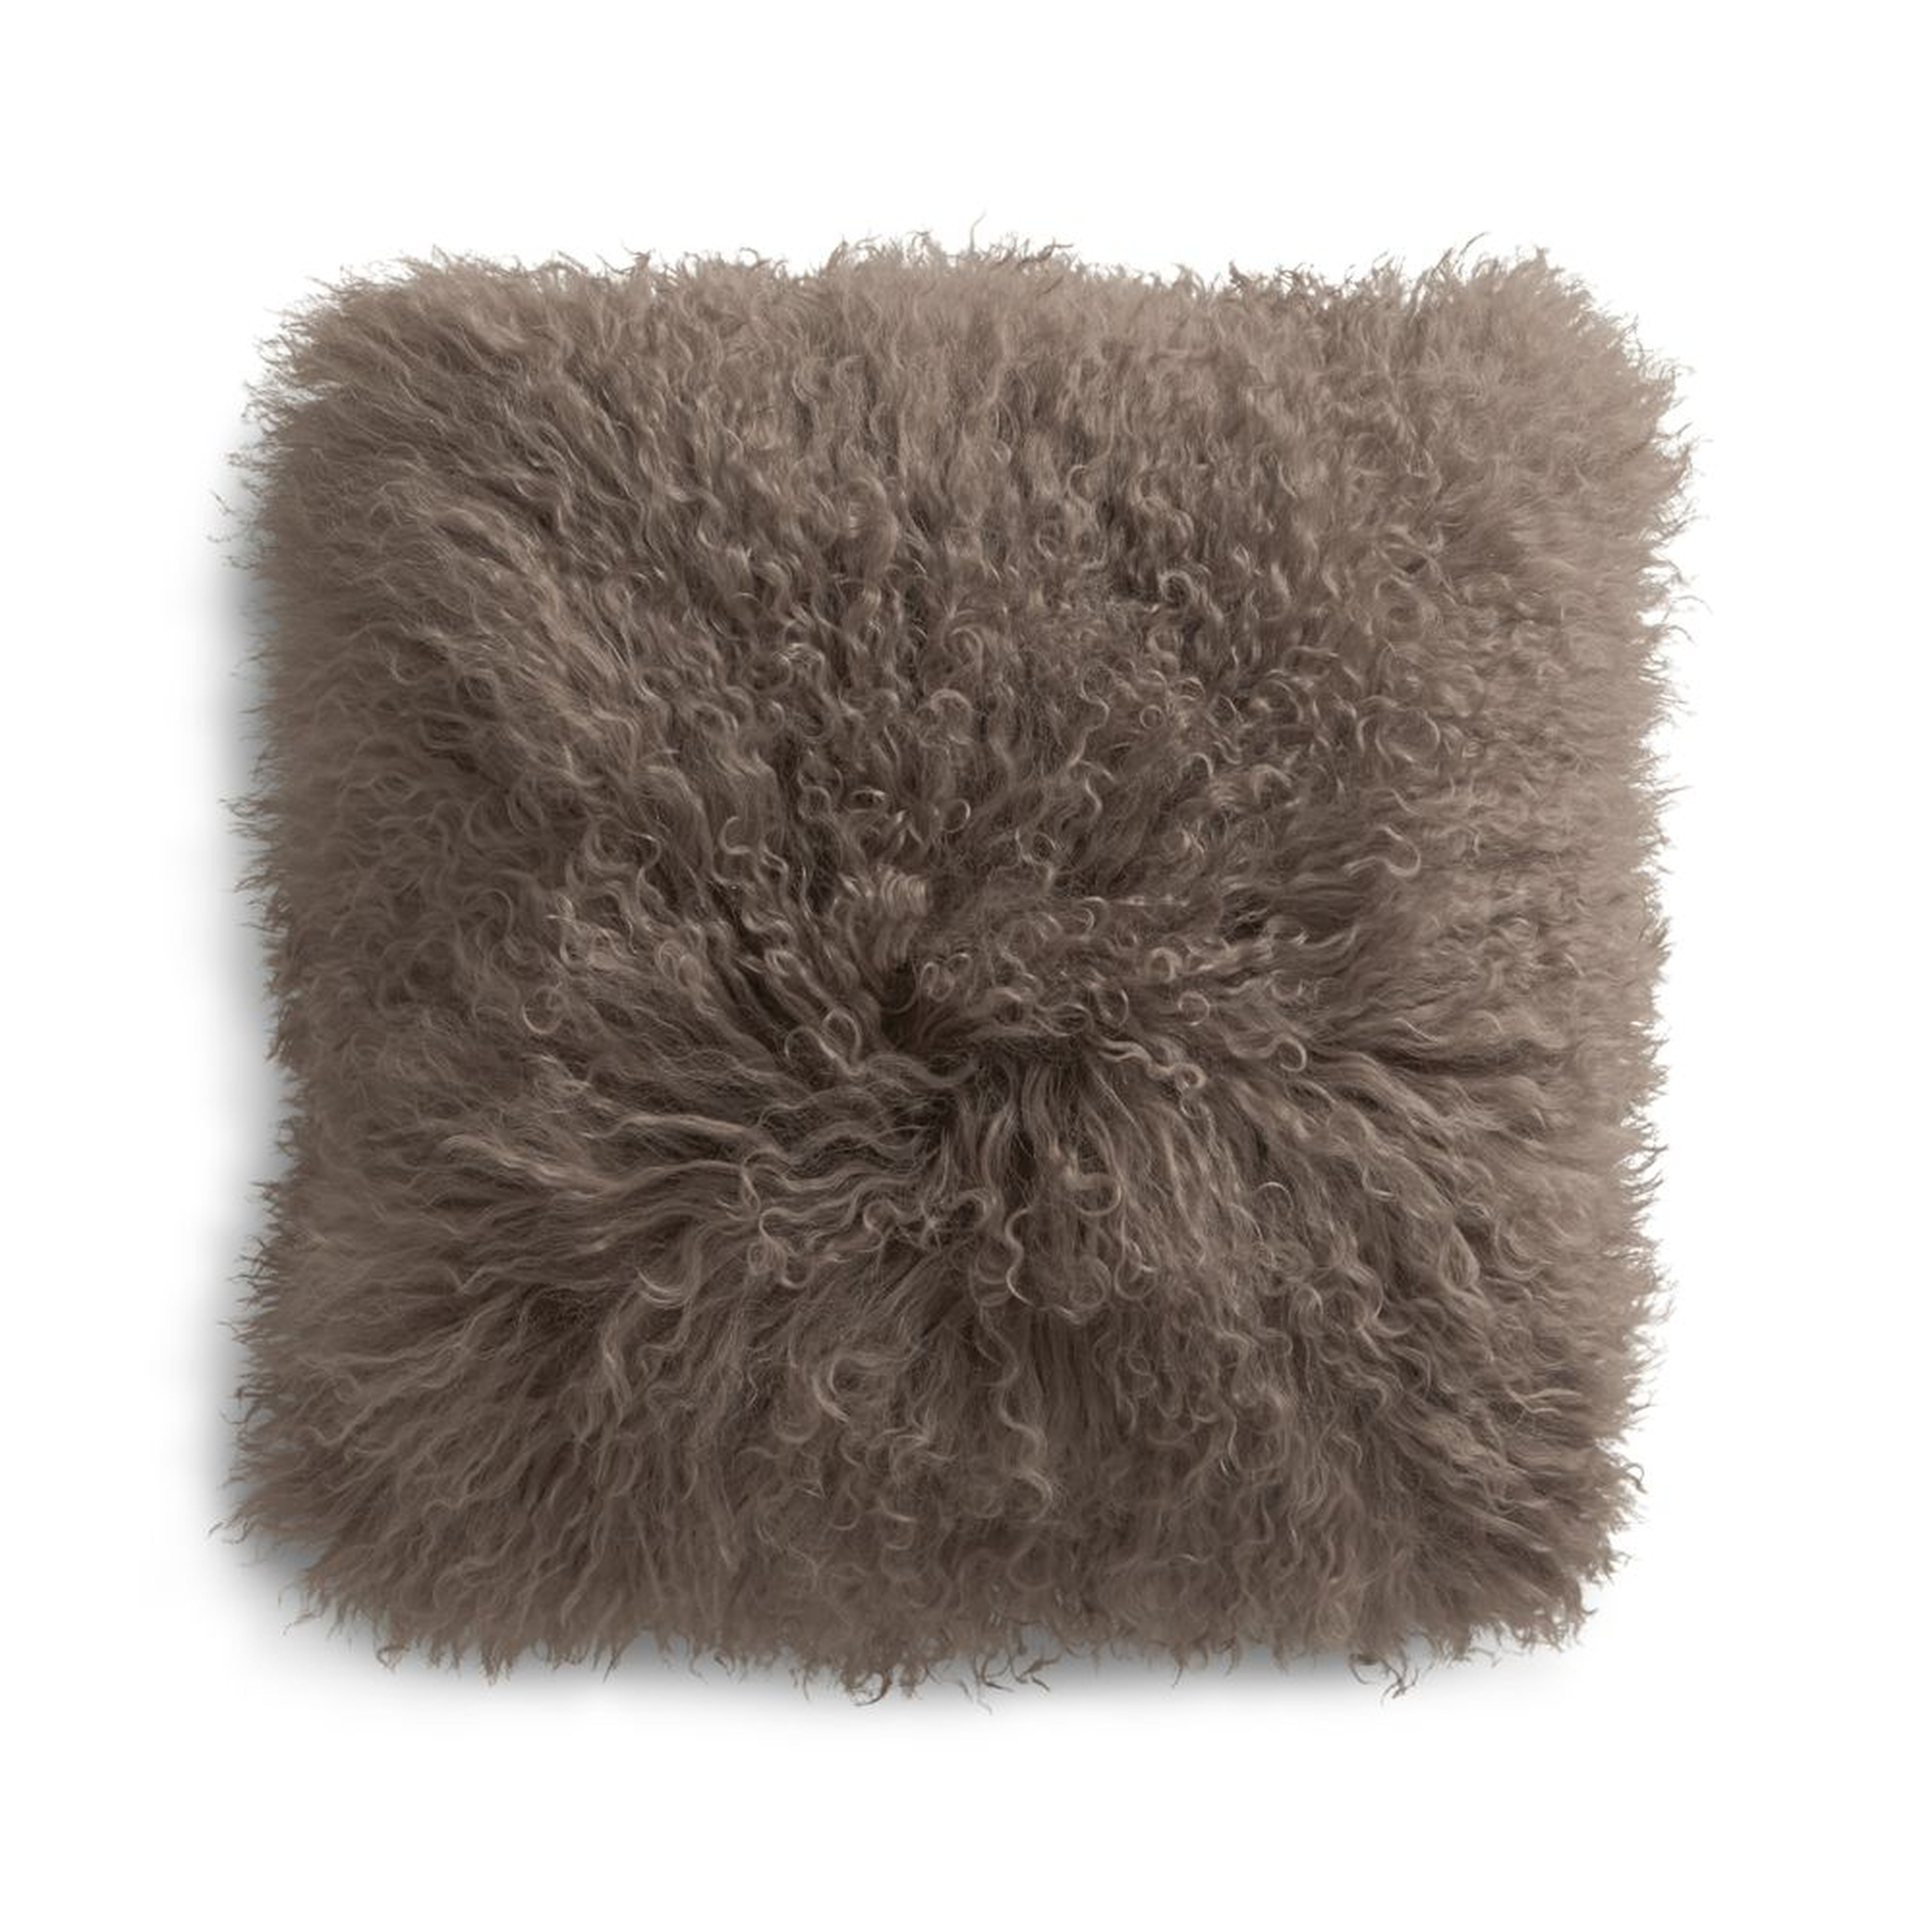 Pelliccia 16"x16" Mushroom Mongolian Sheepskin Throw Pillow Cover - Crate and Barrel